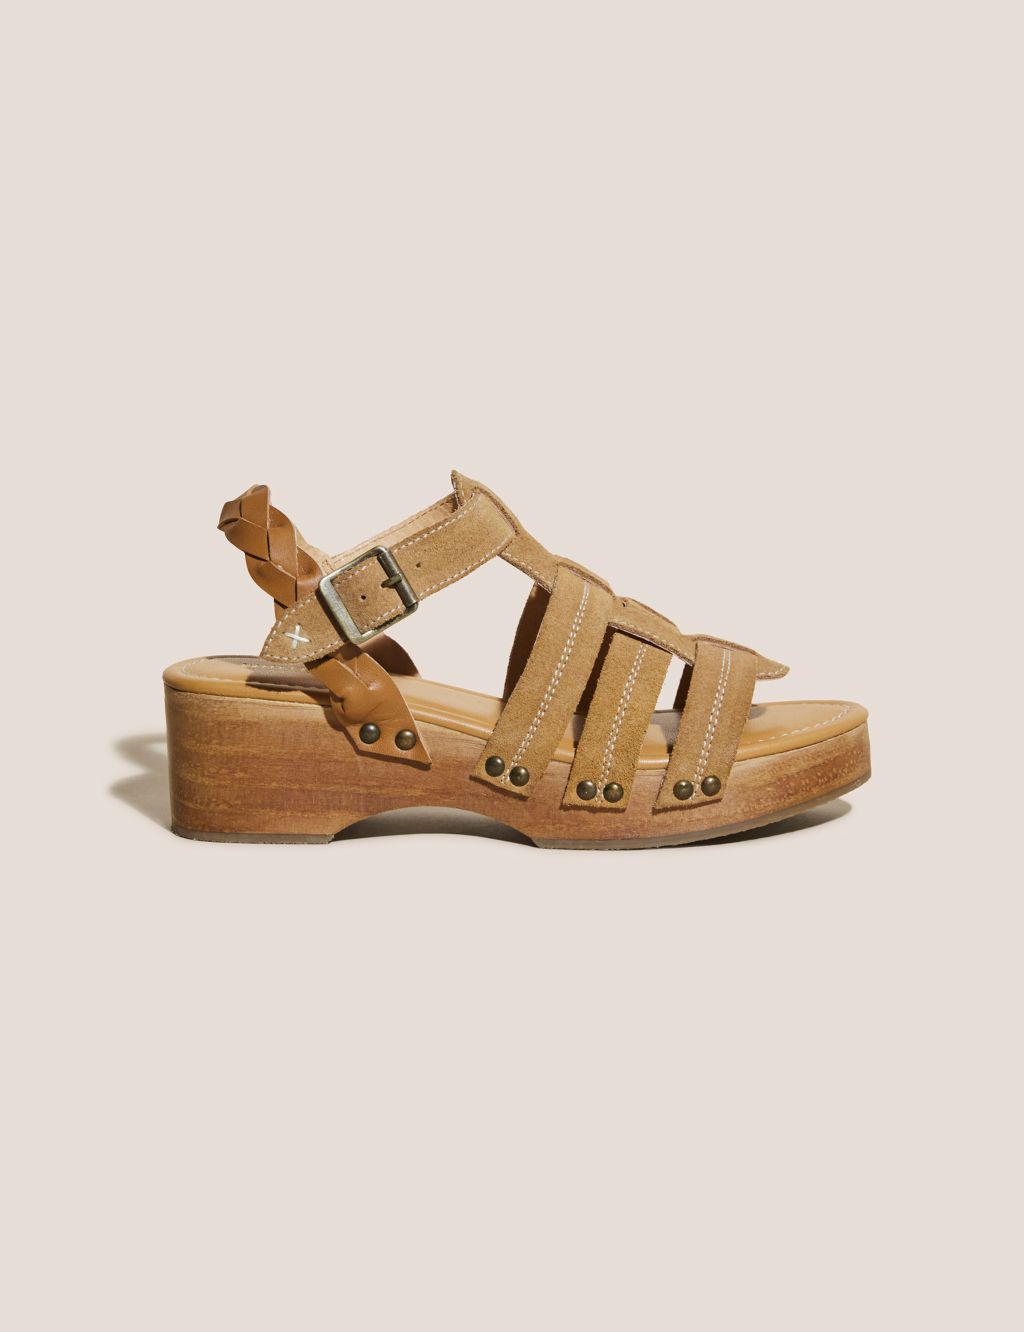 Leather Studded Gladiator Sandals image 1